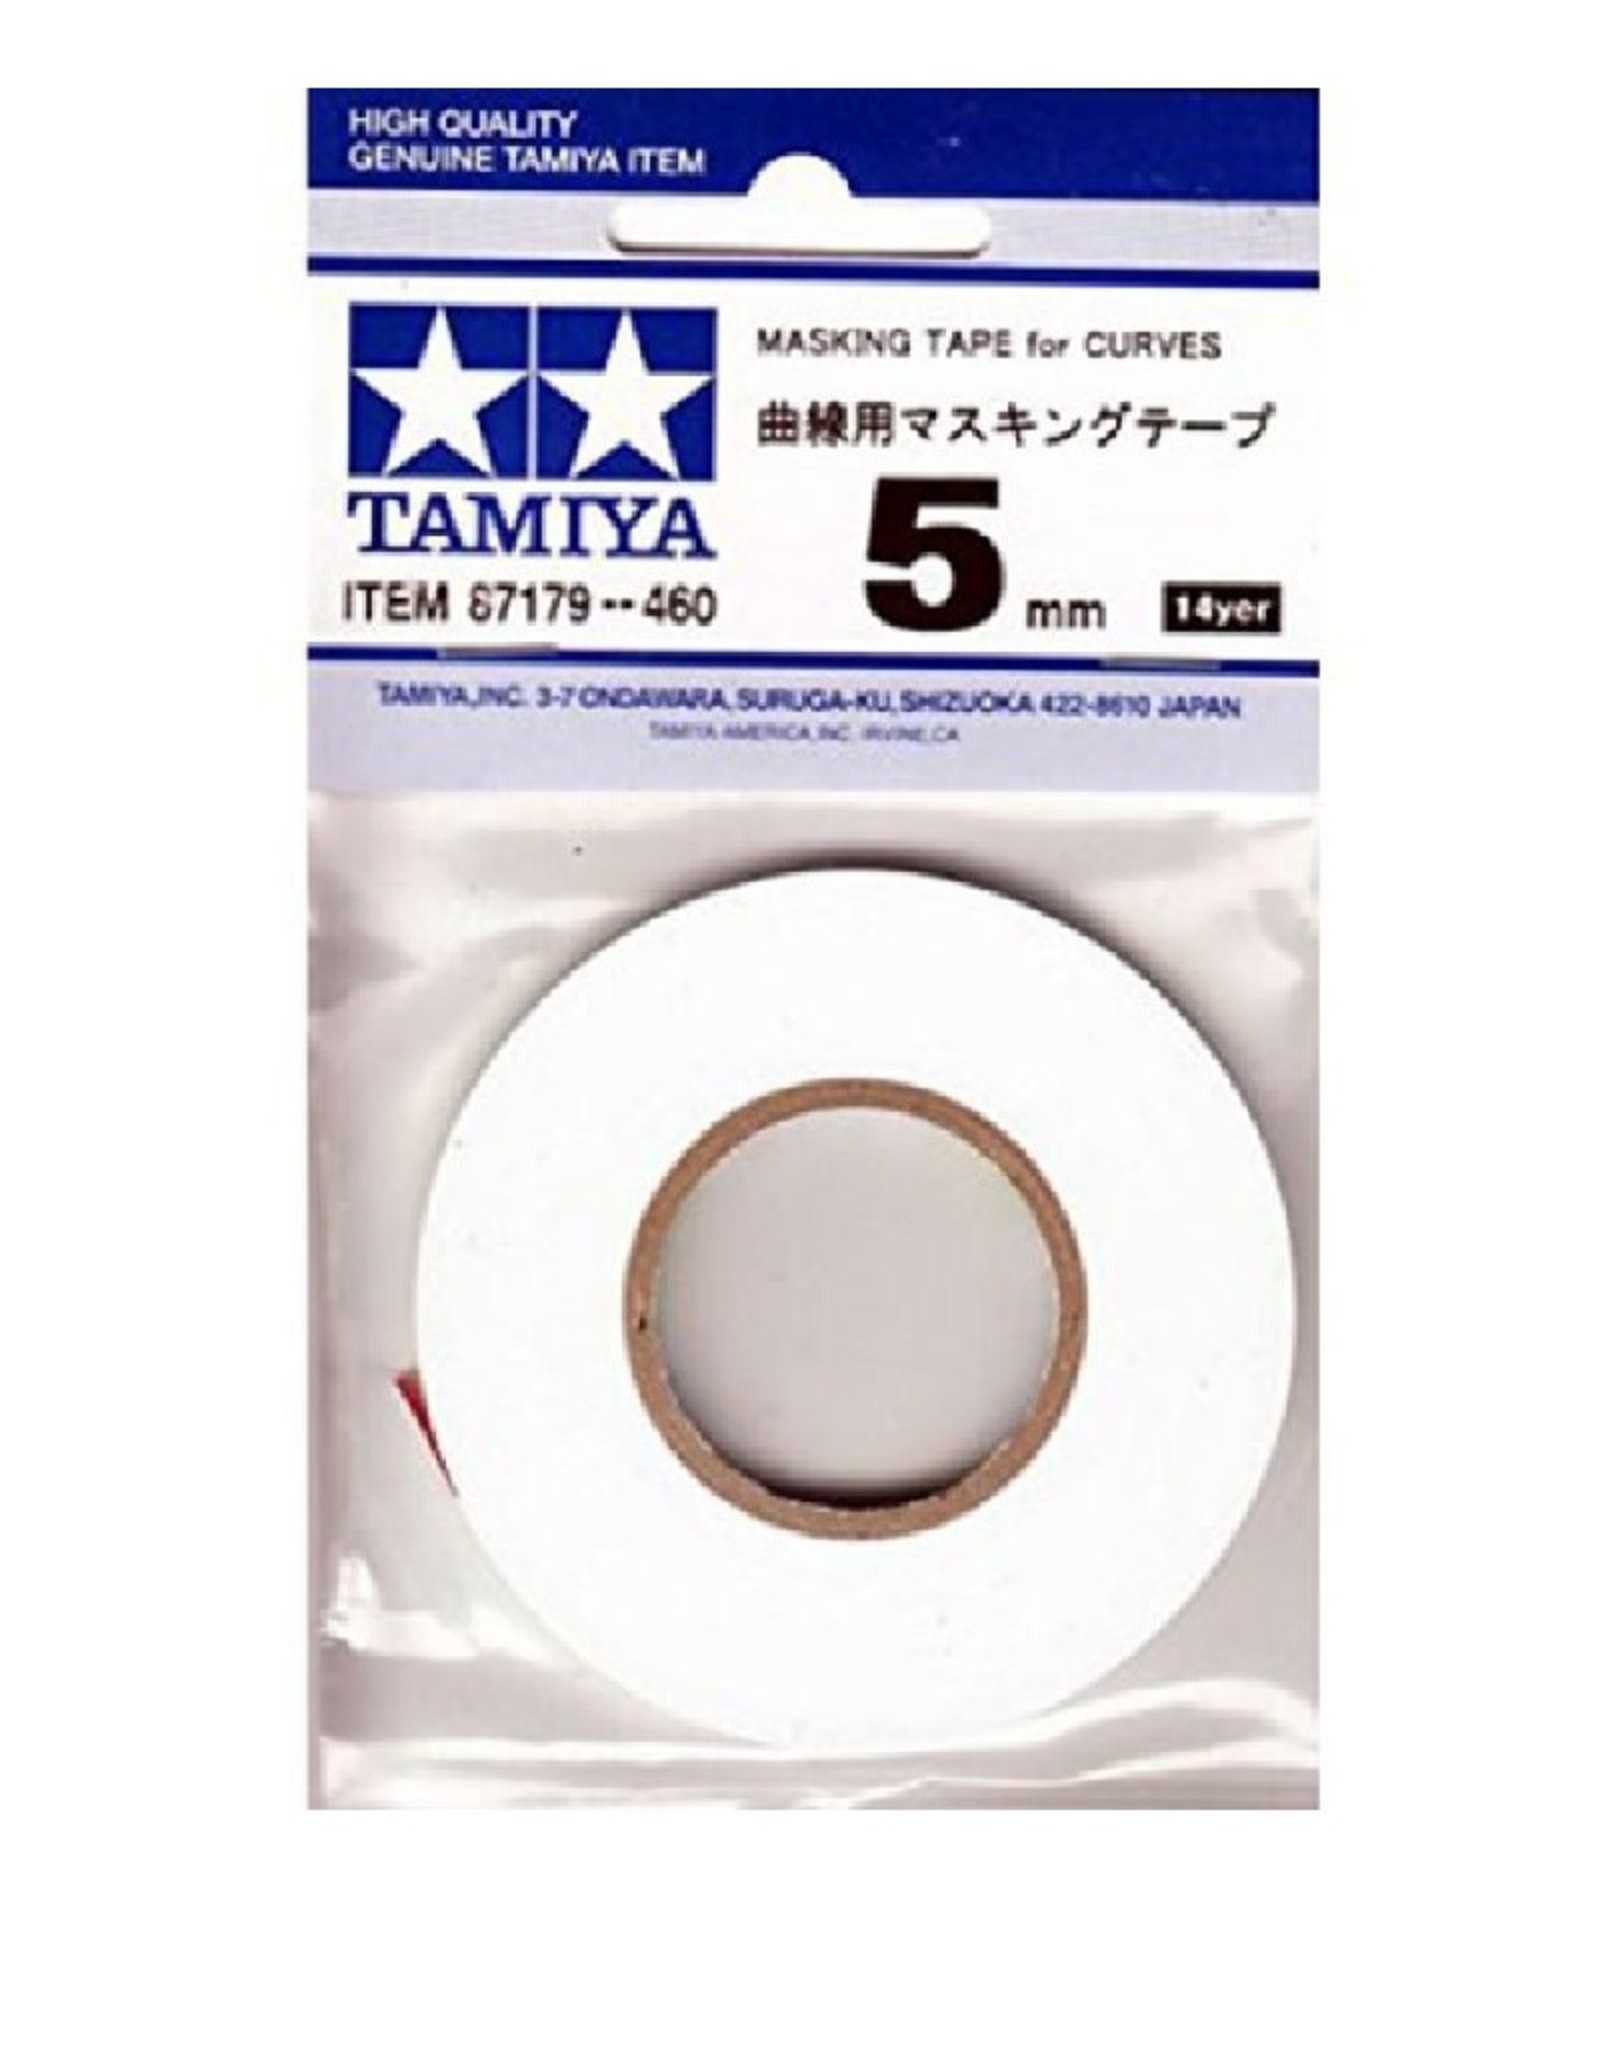 Masking Tape for Curves (5mm)